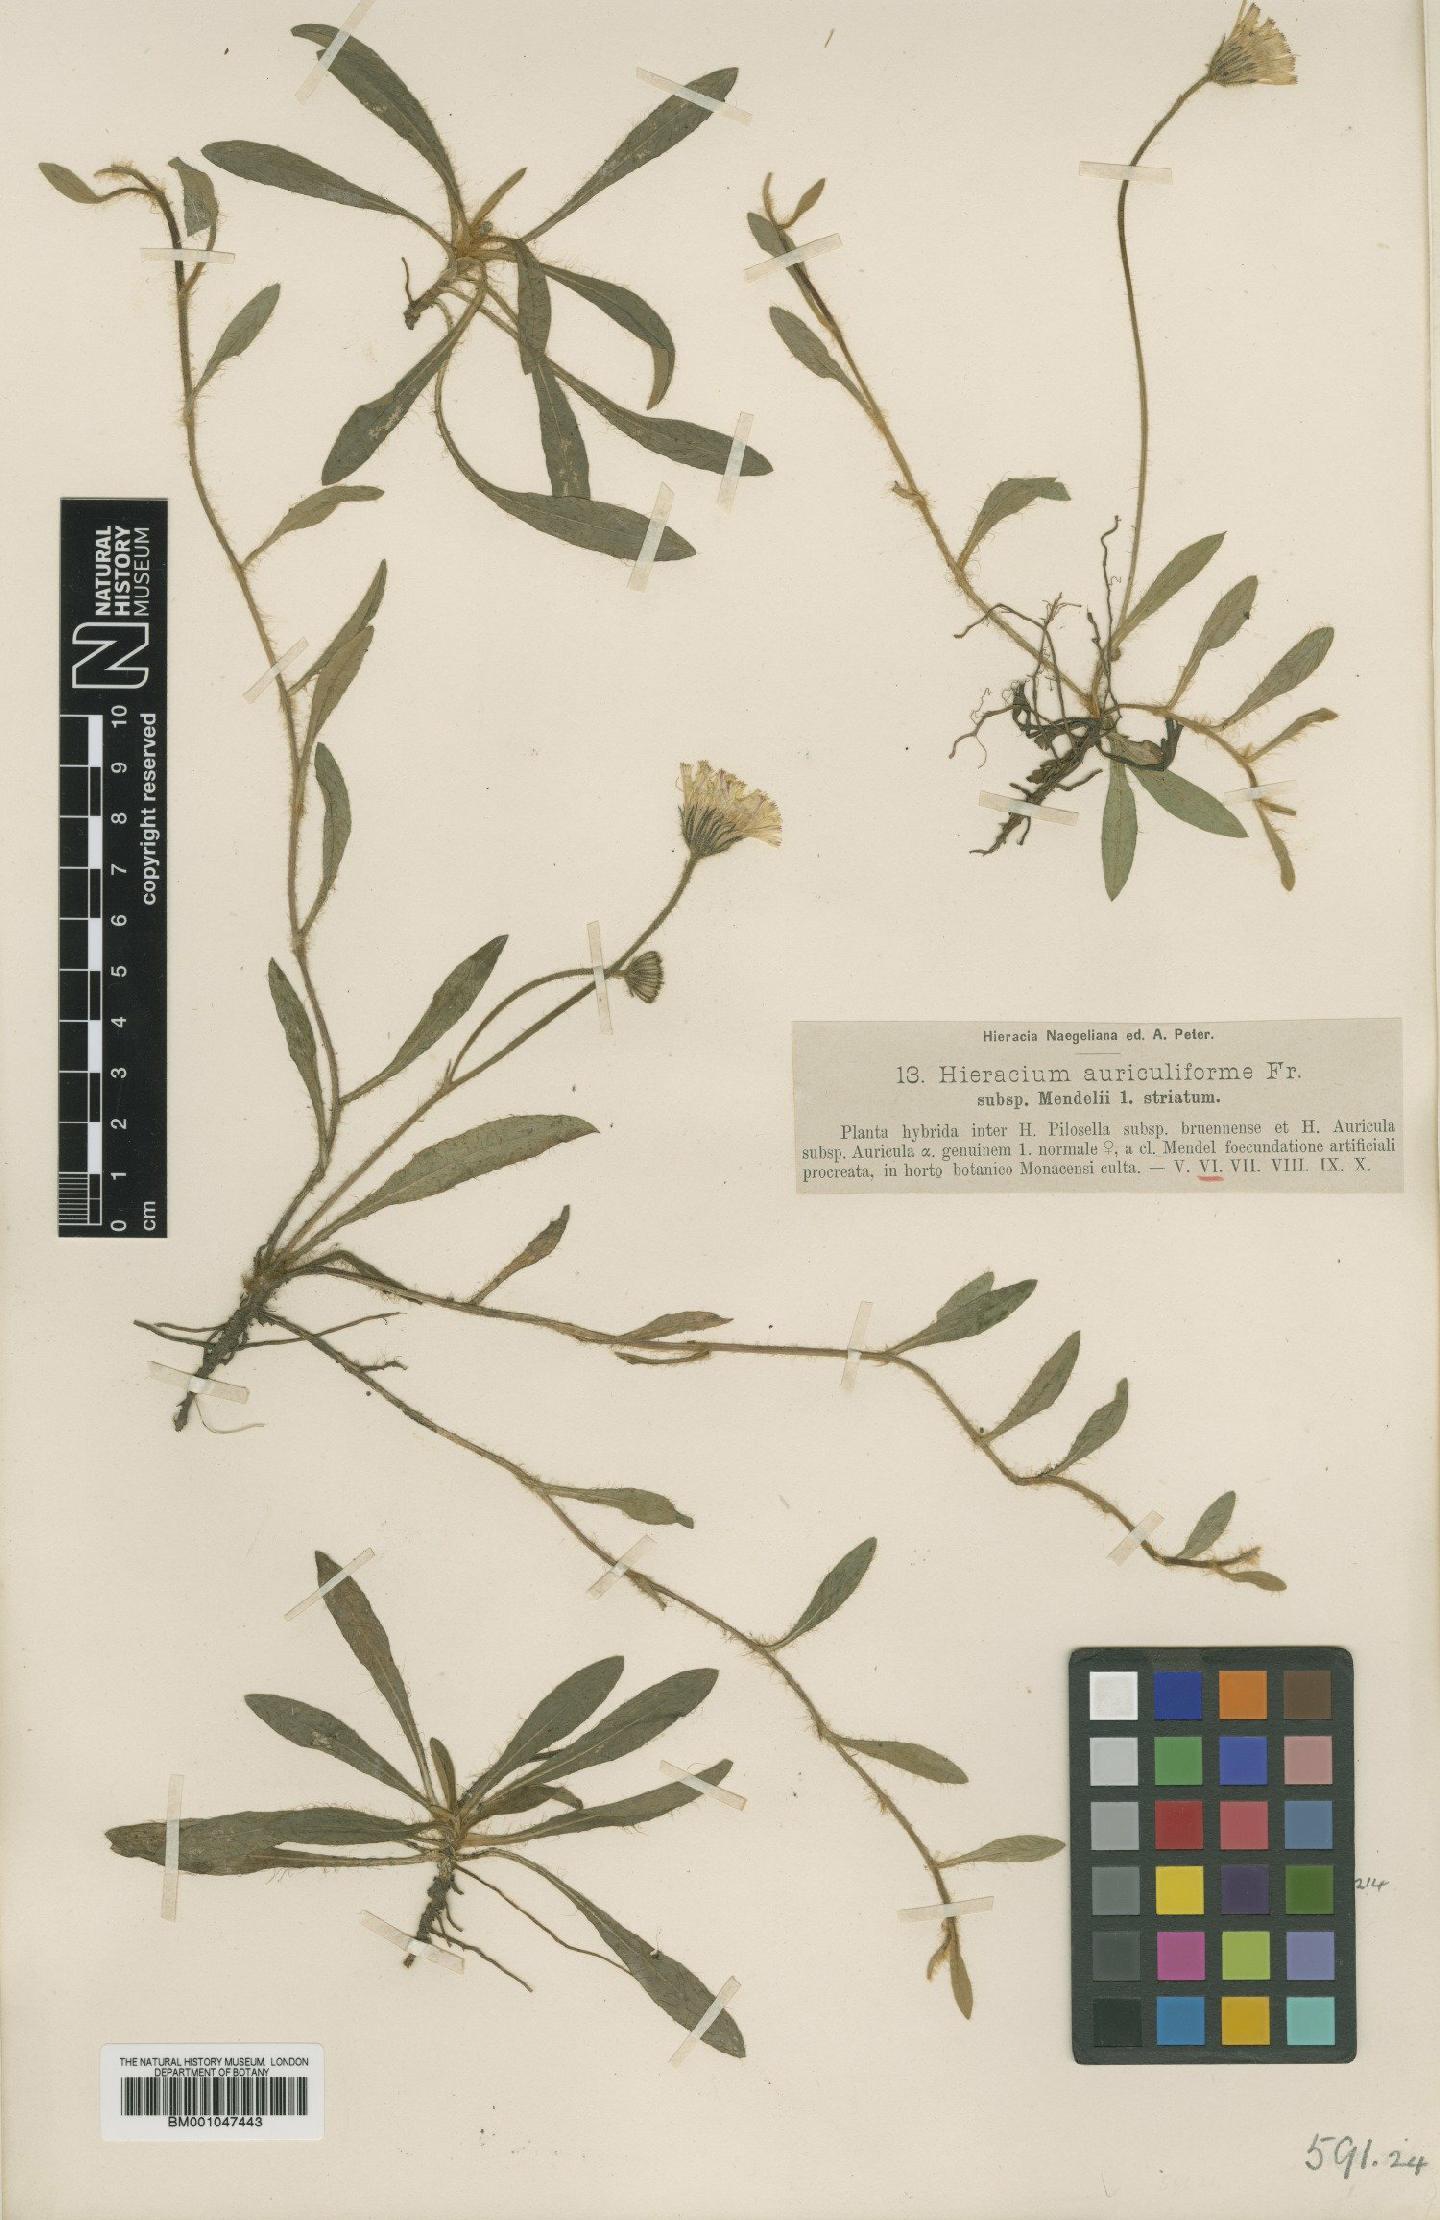 To NHMUK collection (Hieracium schultesii subsp. mendelii Nägeli & Peter; NHMUK:ecatalogue:2763902)